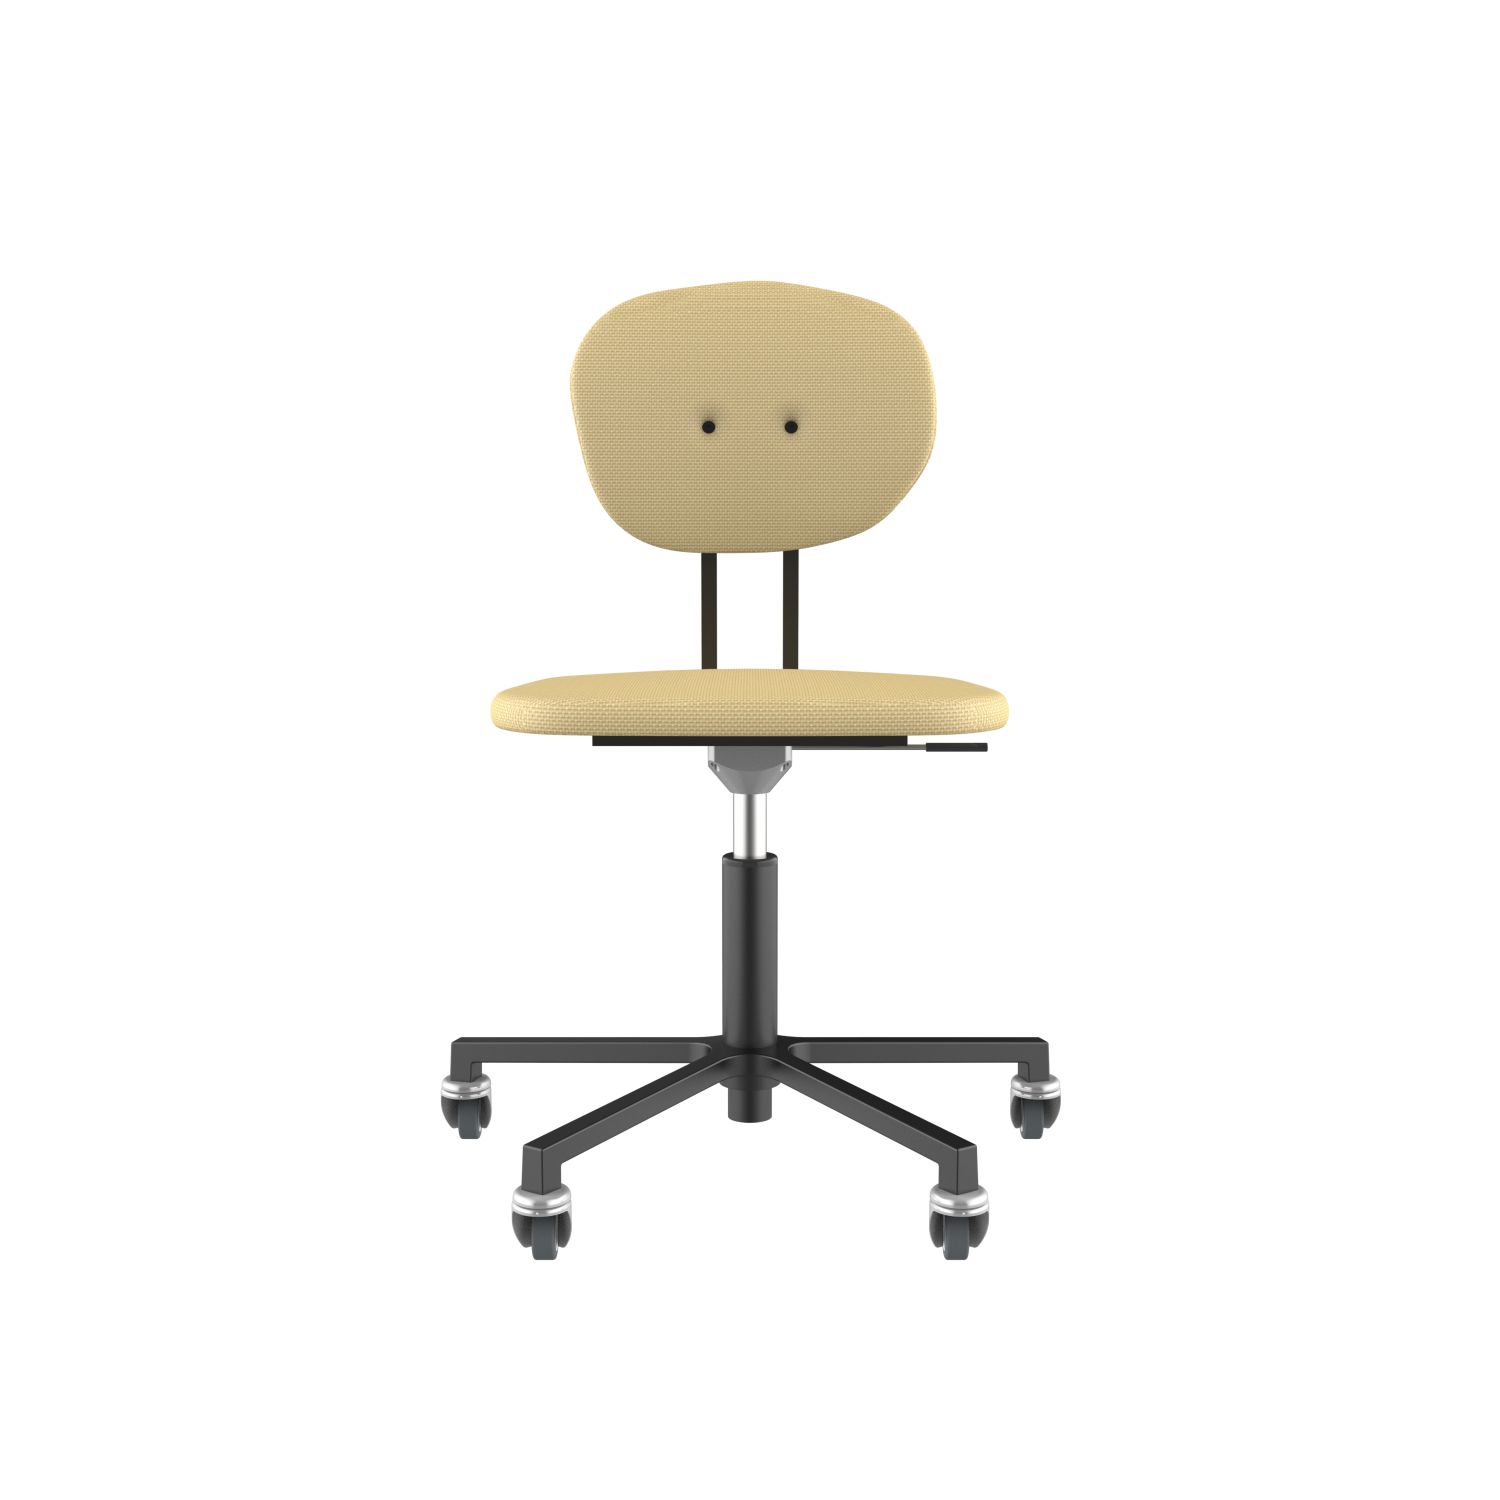 lensvelt maarten baas office chair without armrests backrest a light brown 141 black ral9005 soft wheels